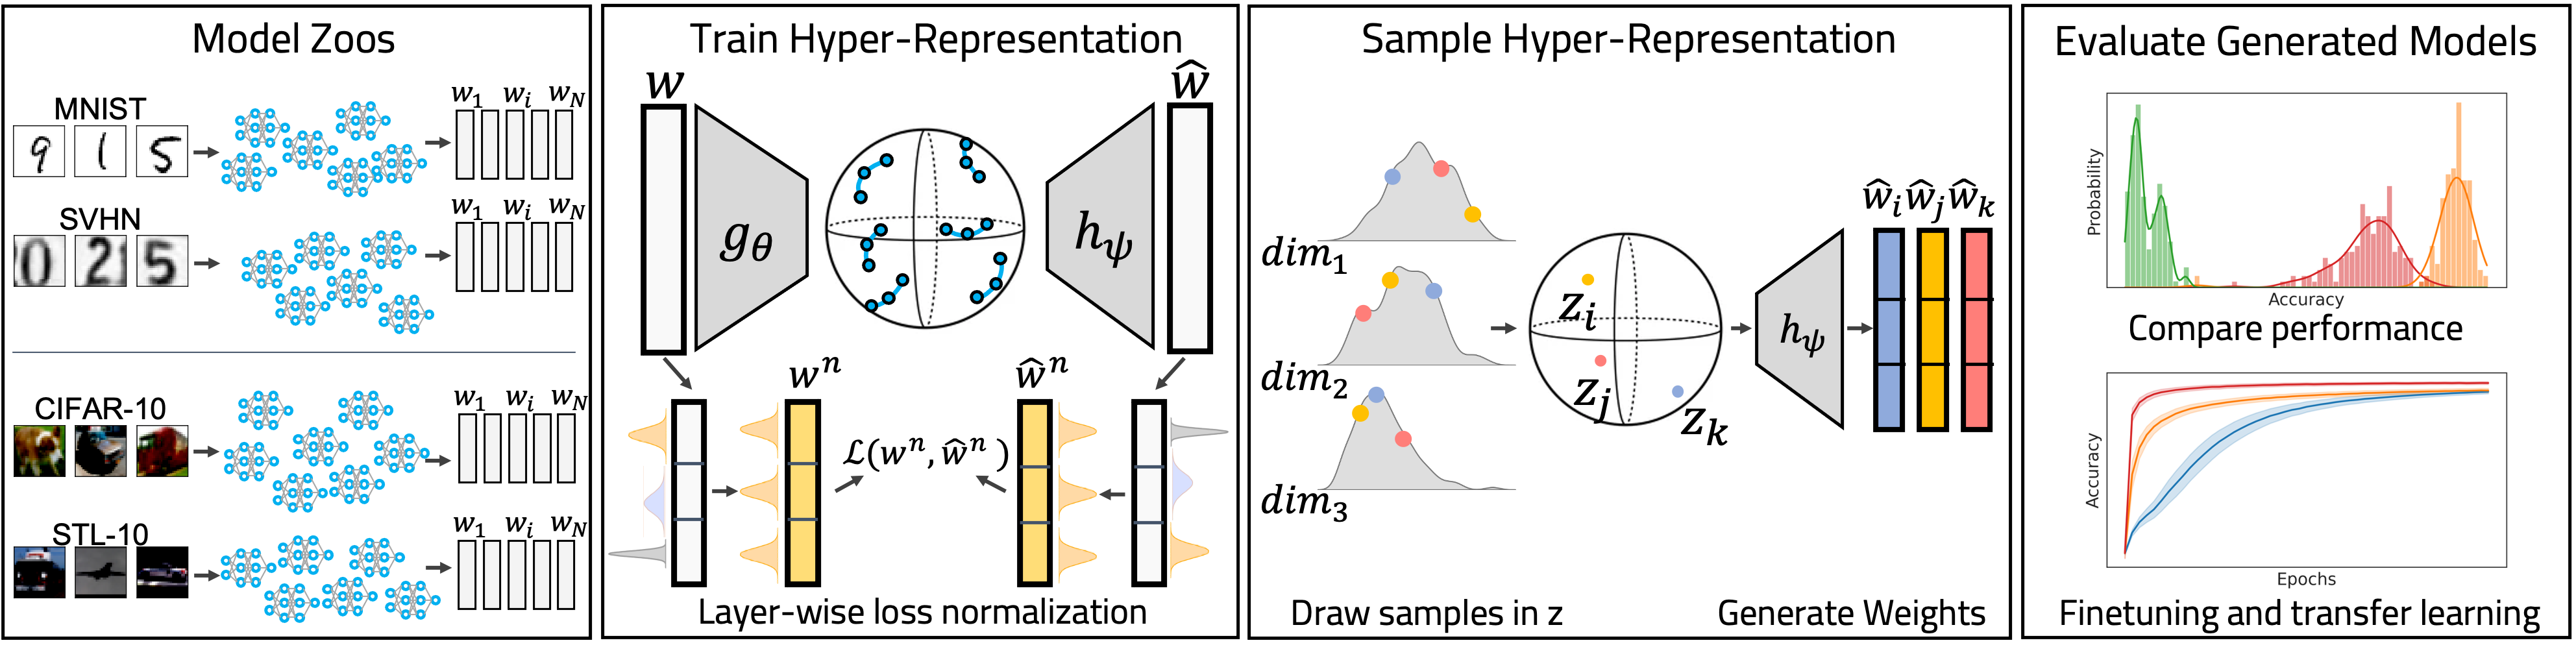 Schematic overview over generative hyper-representations: